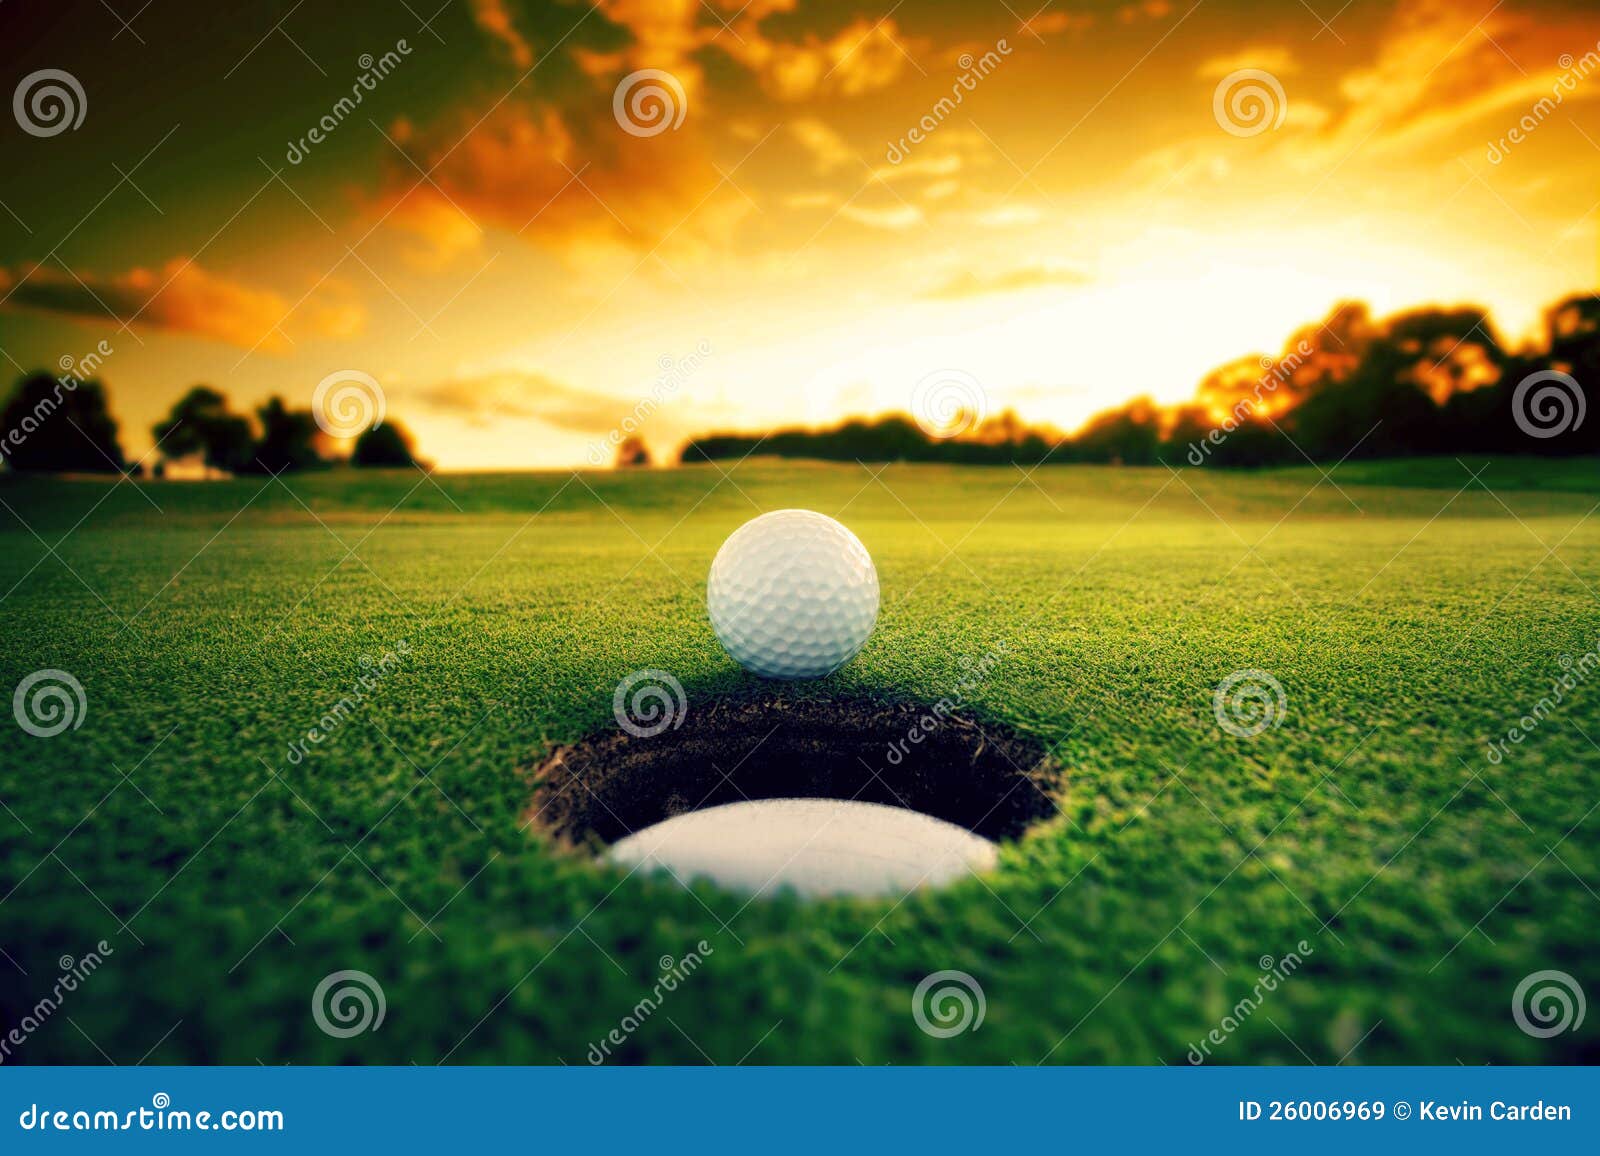 golf ball near hole